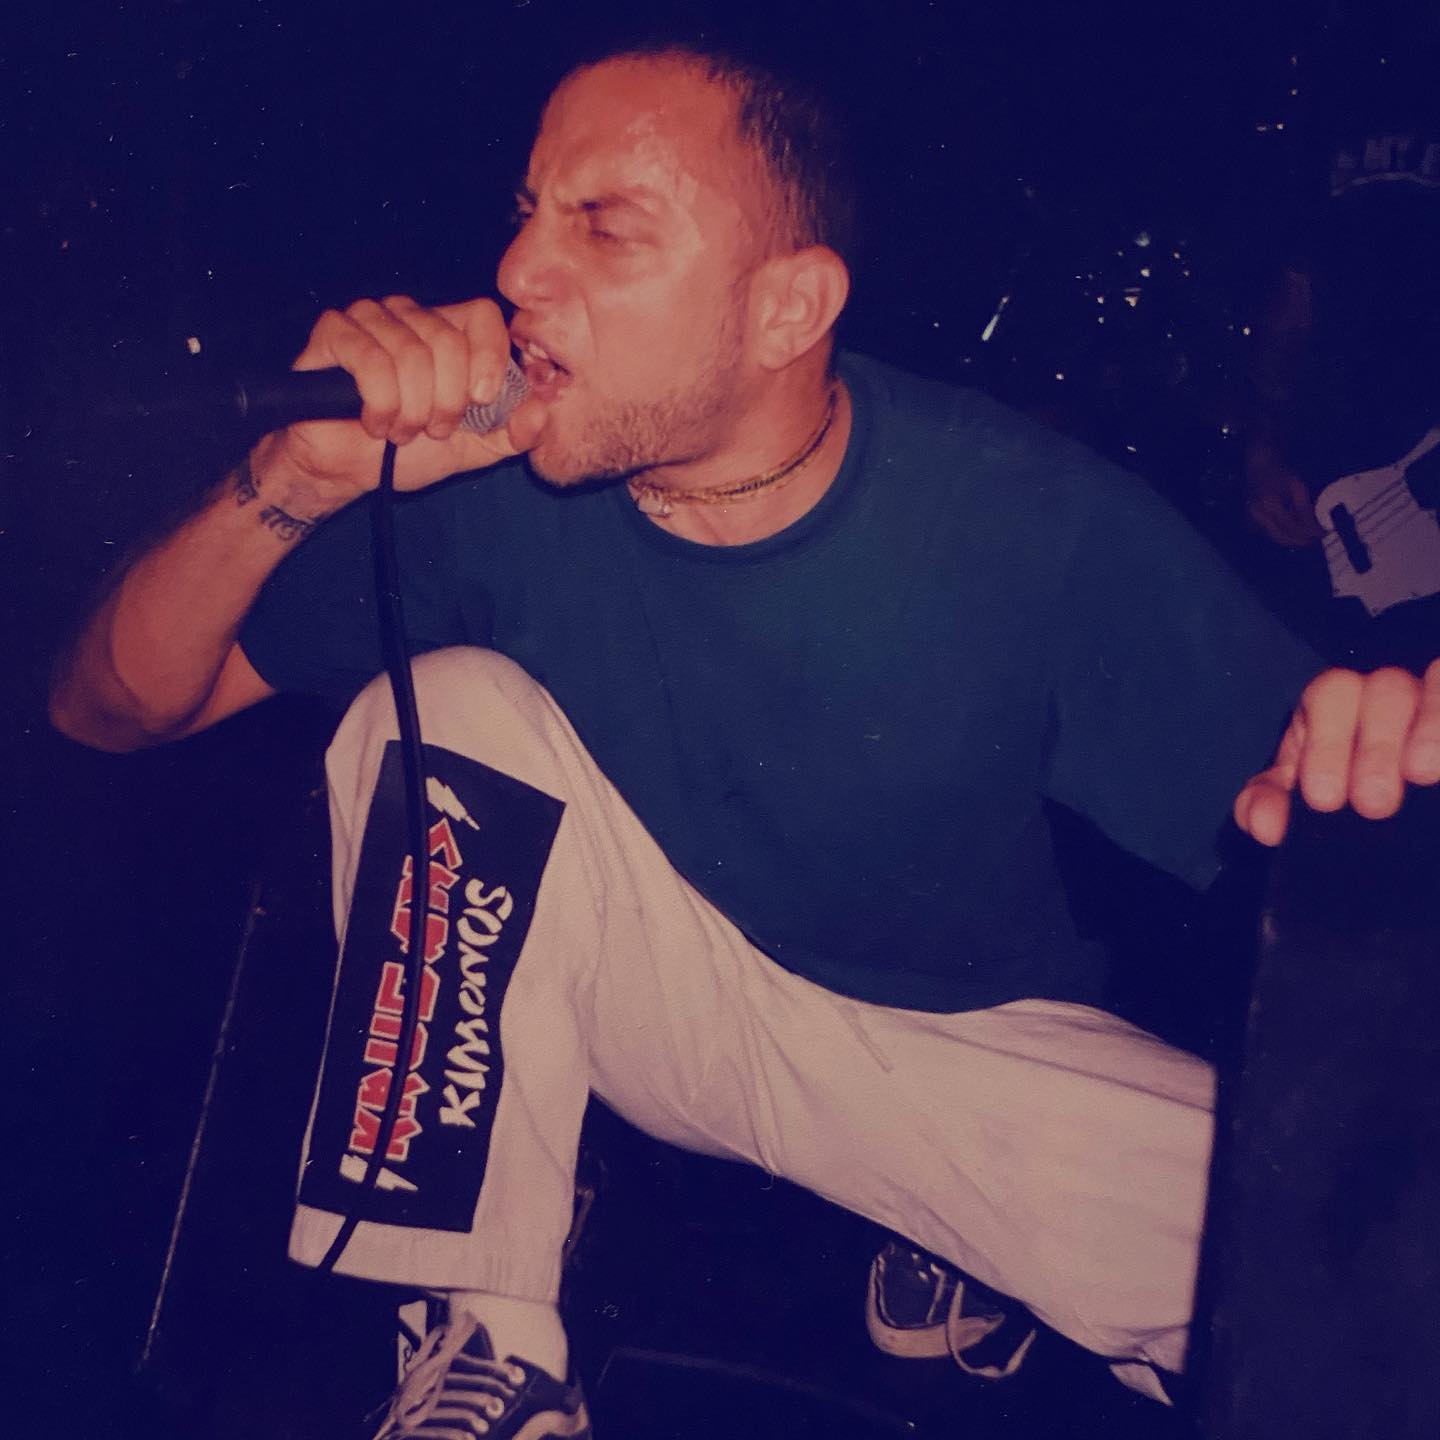 Better Than a Thousand - Melkweg, Amsterdam (NL) - 14 June 1998 #straightedge #hardcore #punkrock @better_than_a_1000_official #gigpic by @twentylandcrew